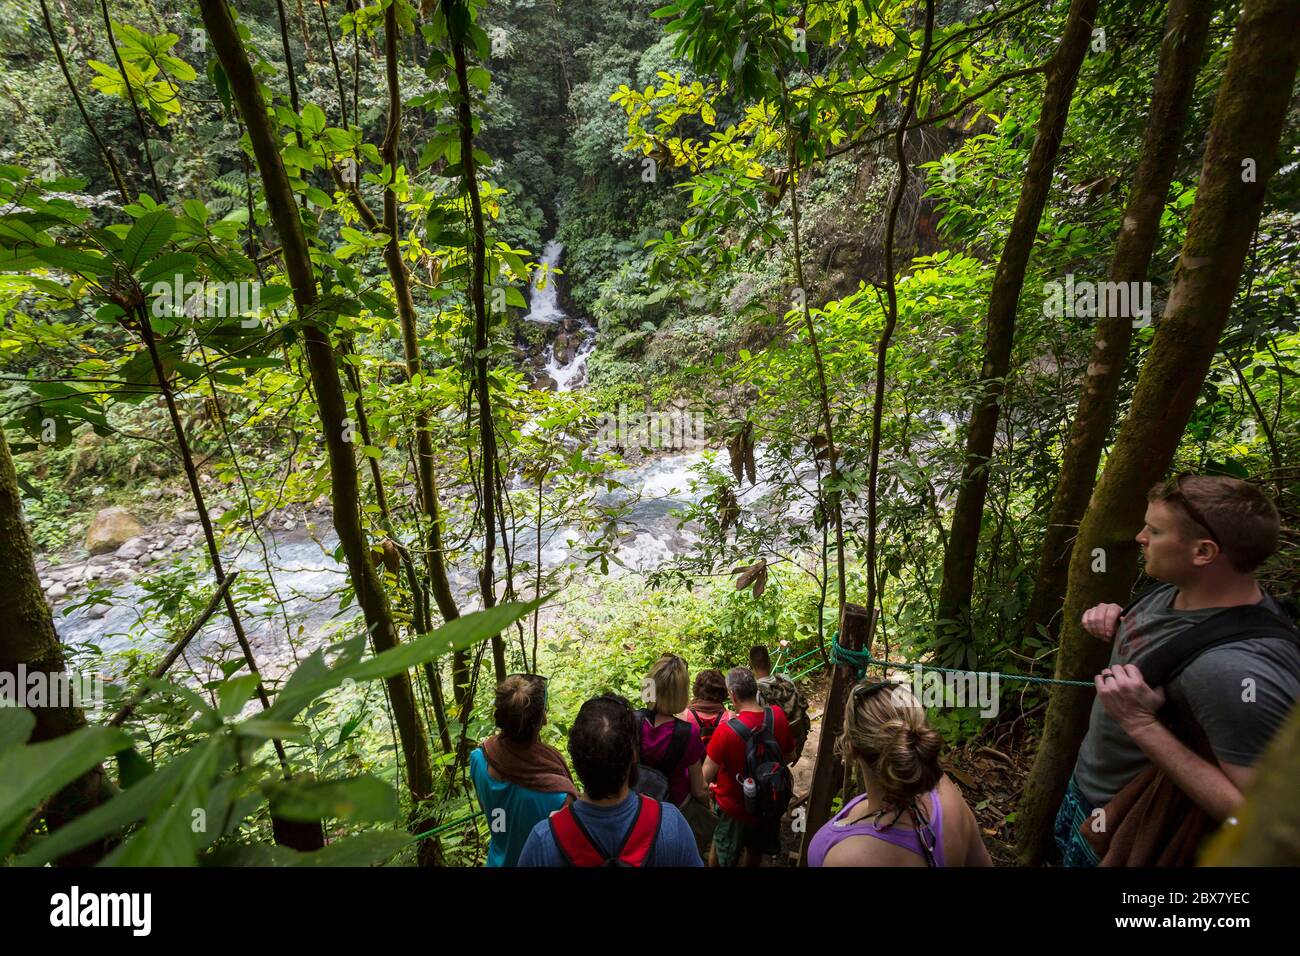 Excursionistas en Sensoria, reserva tropical de selva tropical, Rincón de la Vieja, Provincia de Alajuela, Costa Rica Foto de stock